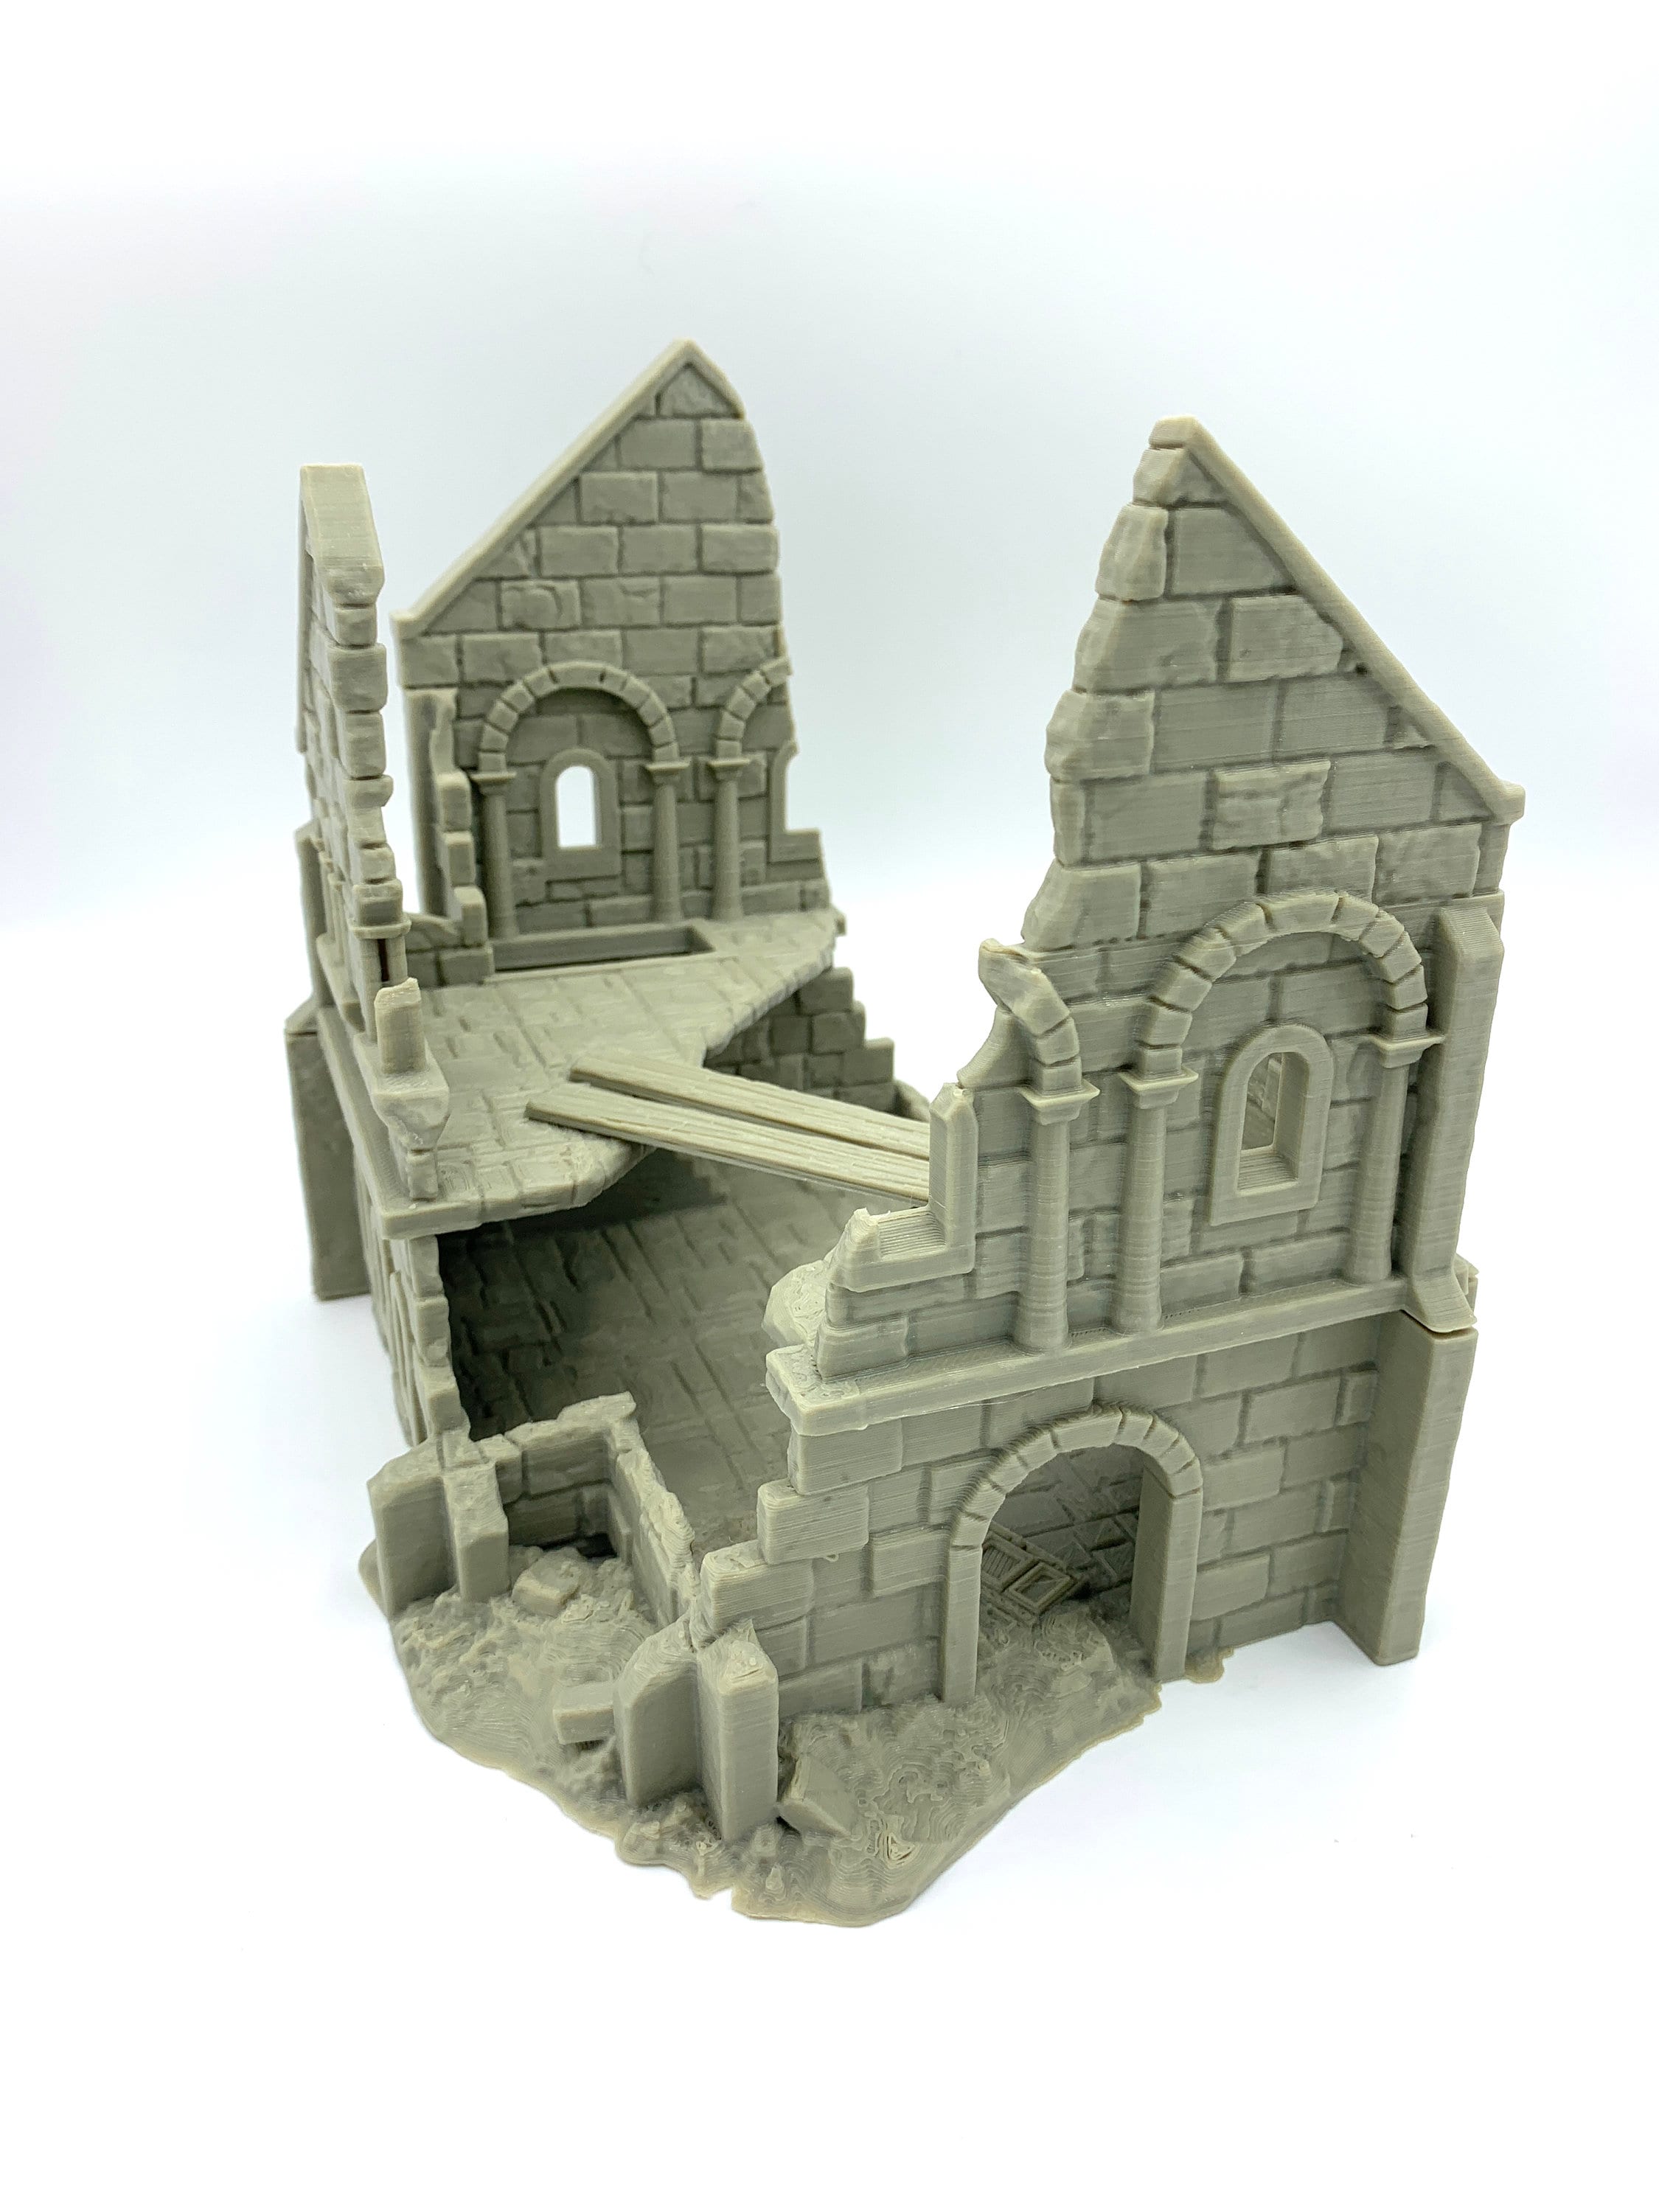 Arkenfel Ruined House 4 / Dark Realms Terrain / RPG and Wargame 3d Printed Tabletop Terrain / Licensed Printer